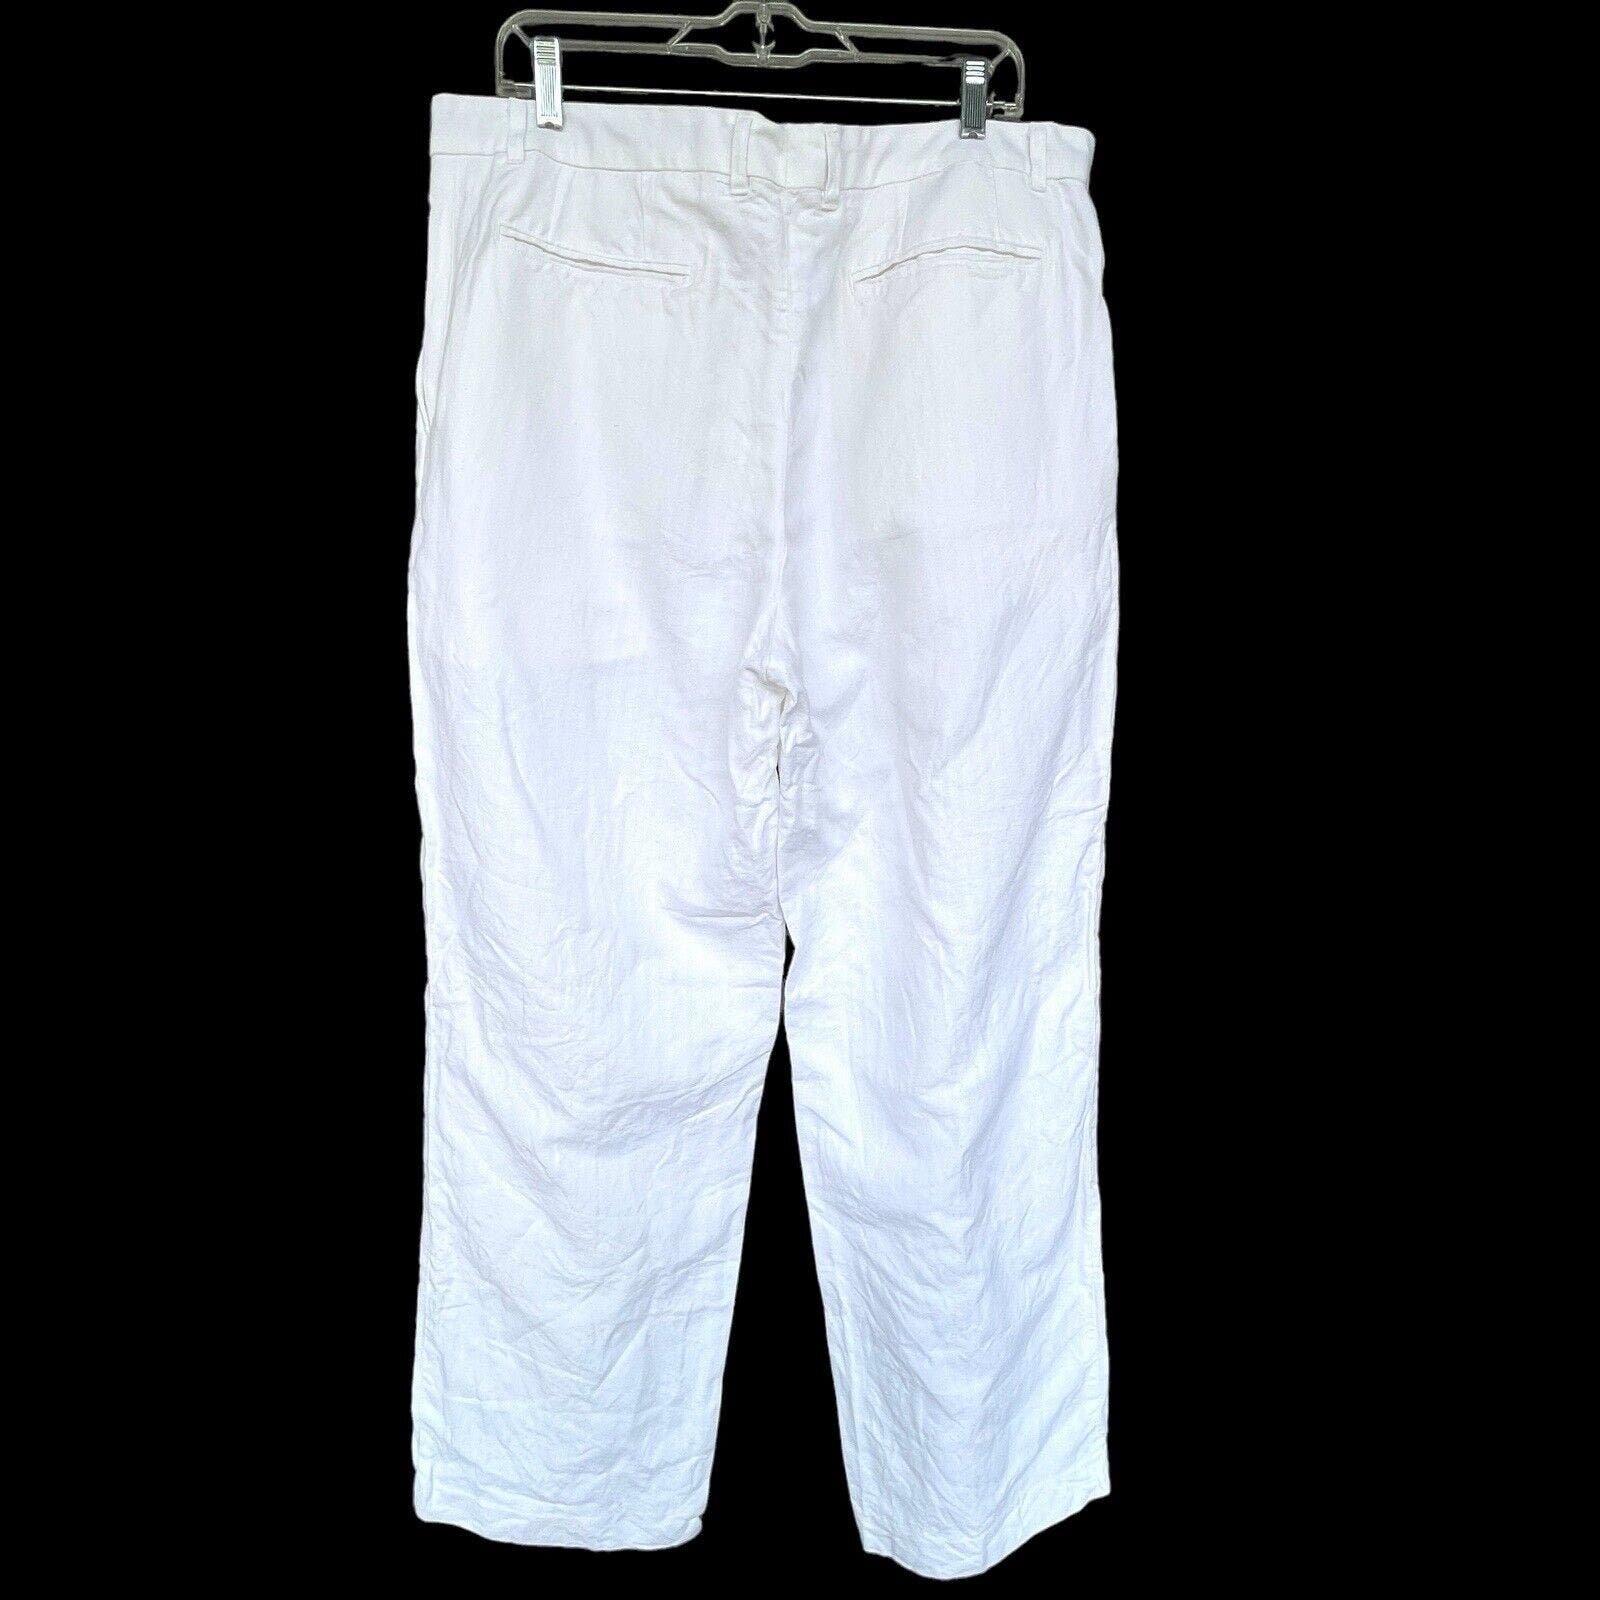 Classic Claiborne Pants Womens Size 38/32 White Linen Blend Wide Leg Summer Beachy HmTmdfz2V Outlet Store